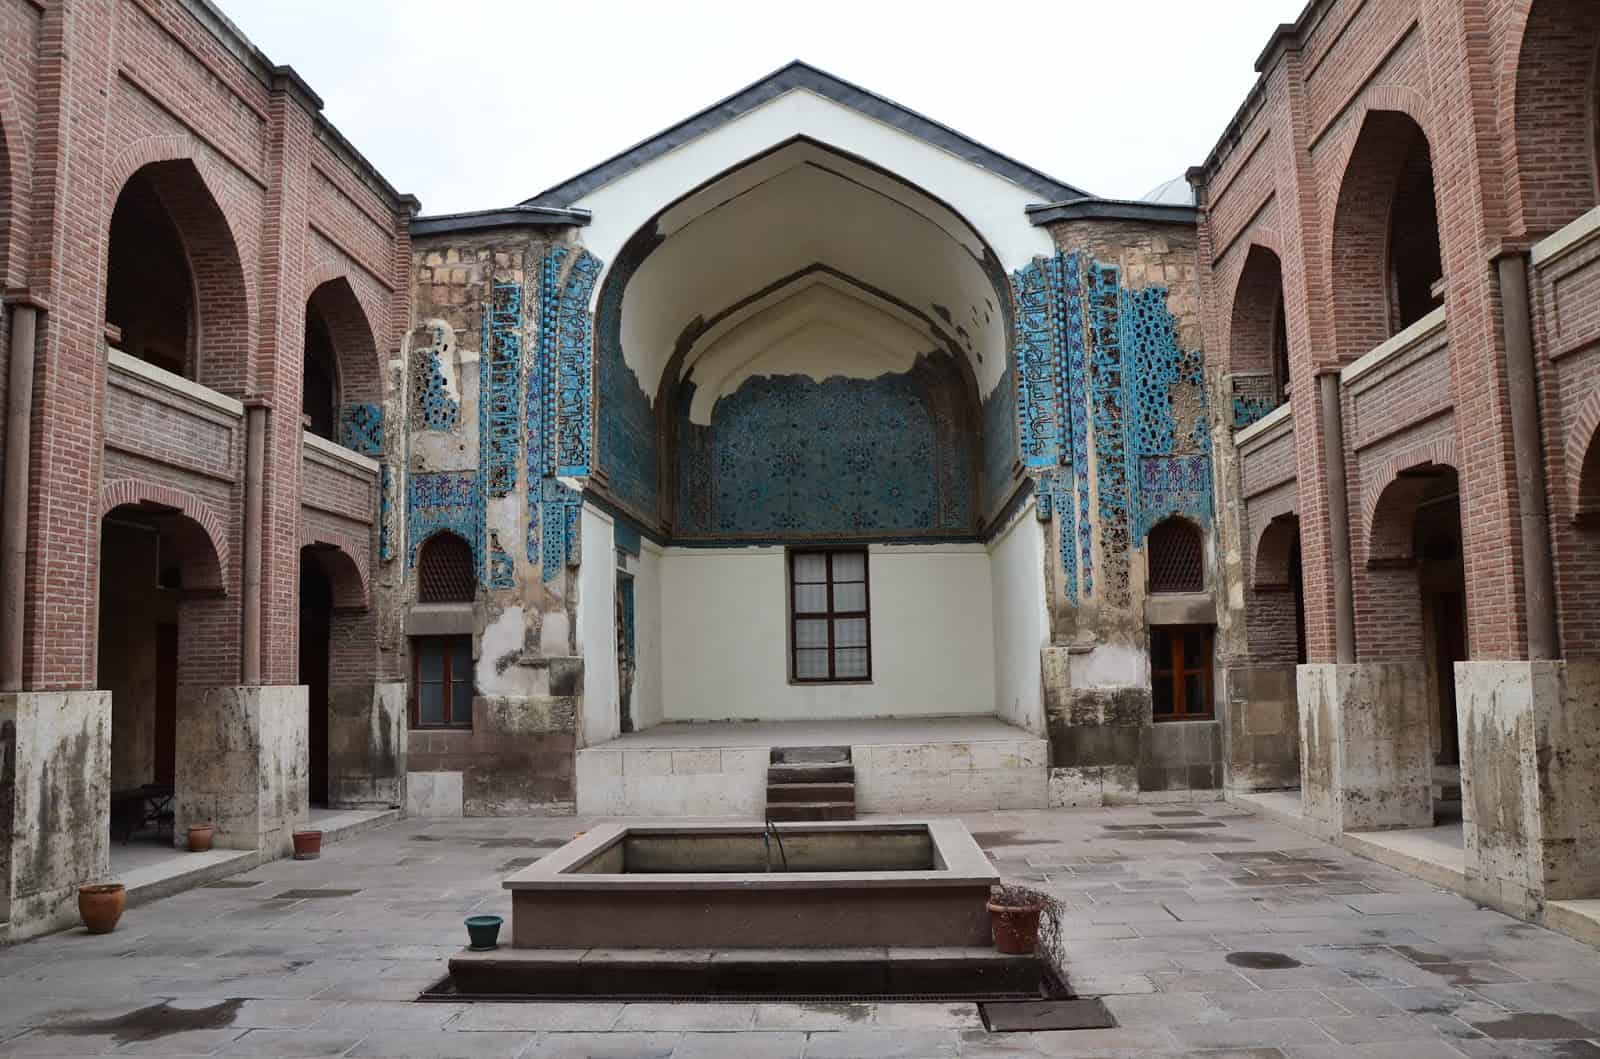 Courtyard of the Sırçalı Madrasa in Konya, Turkey